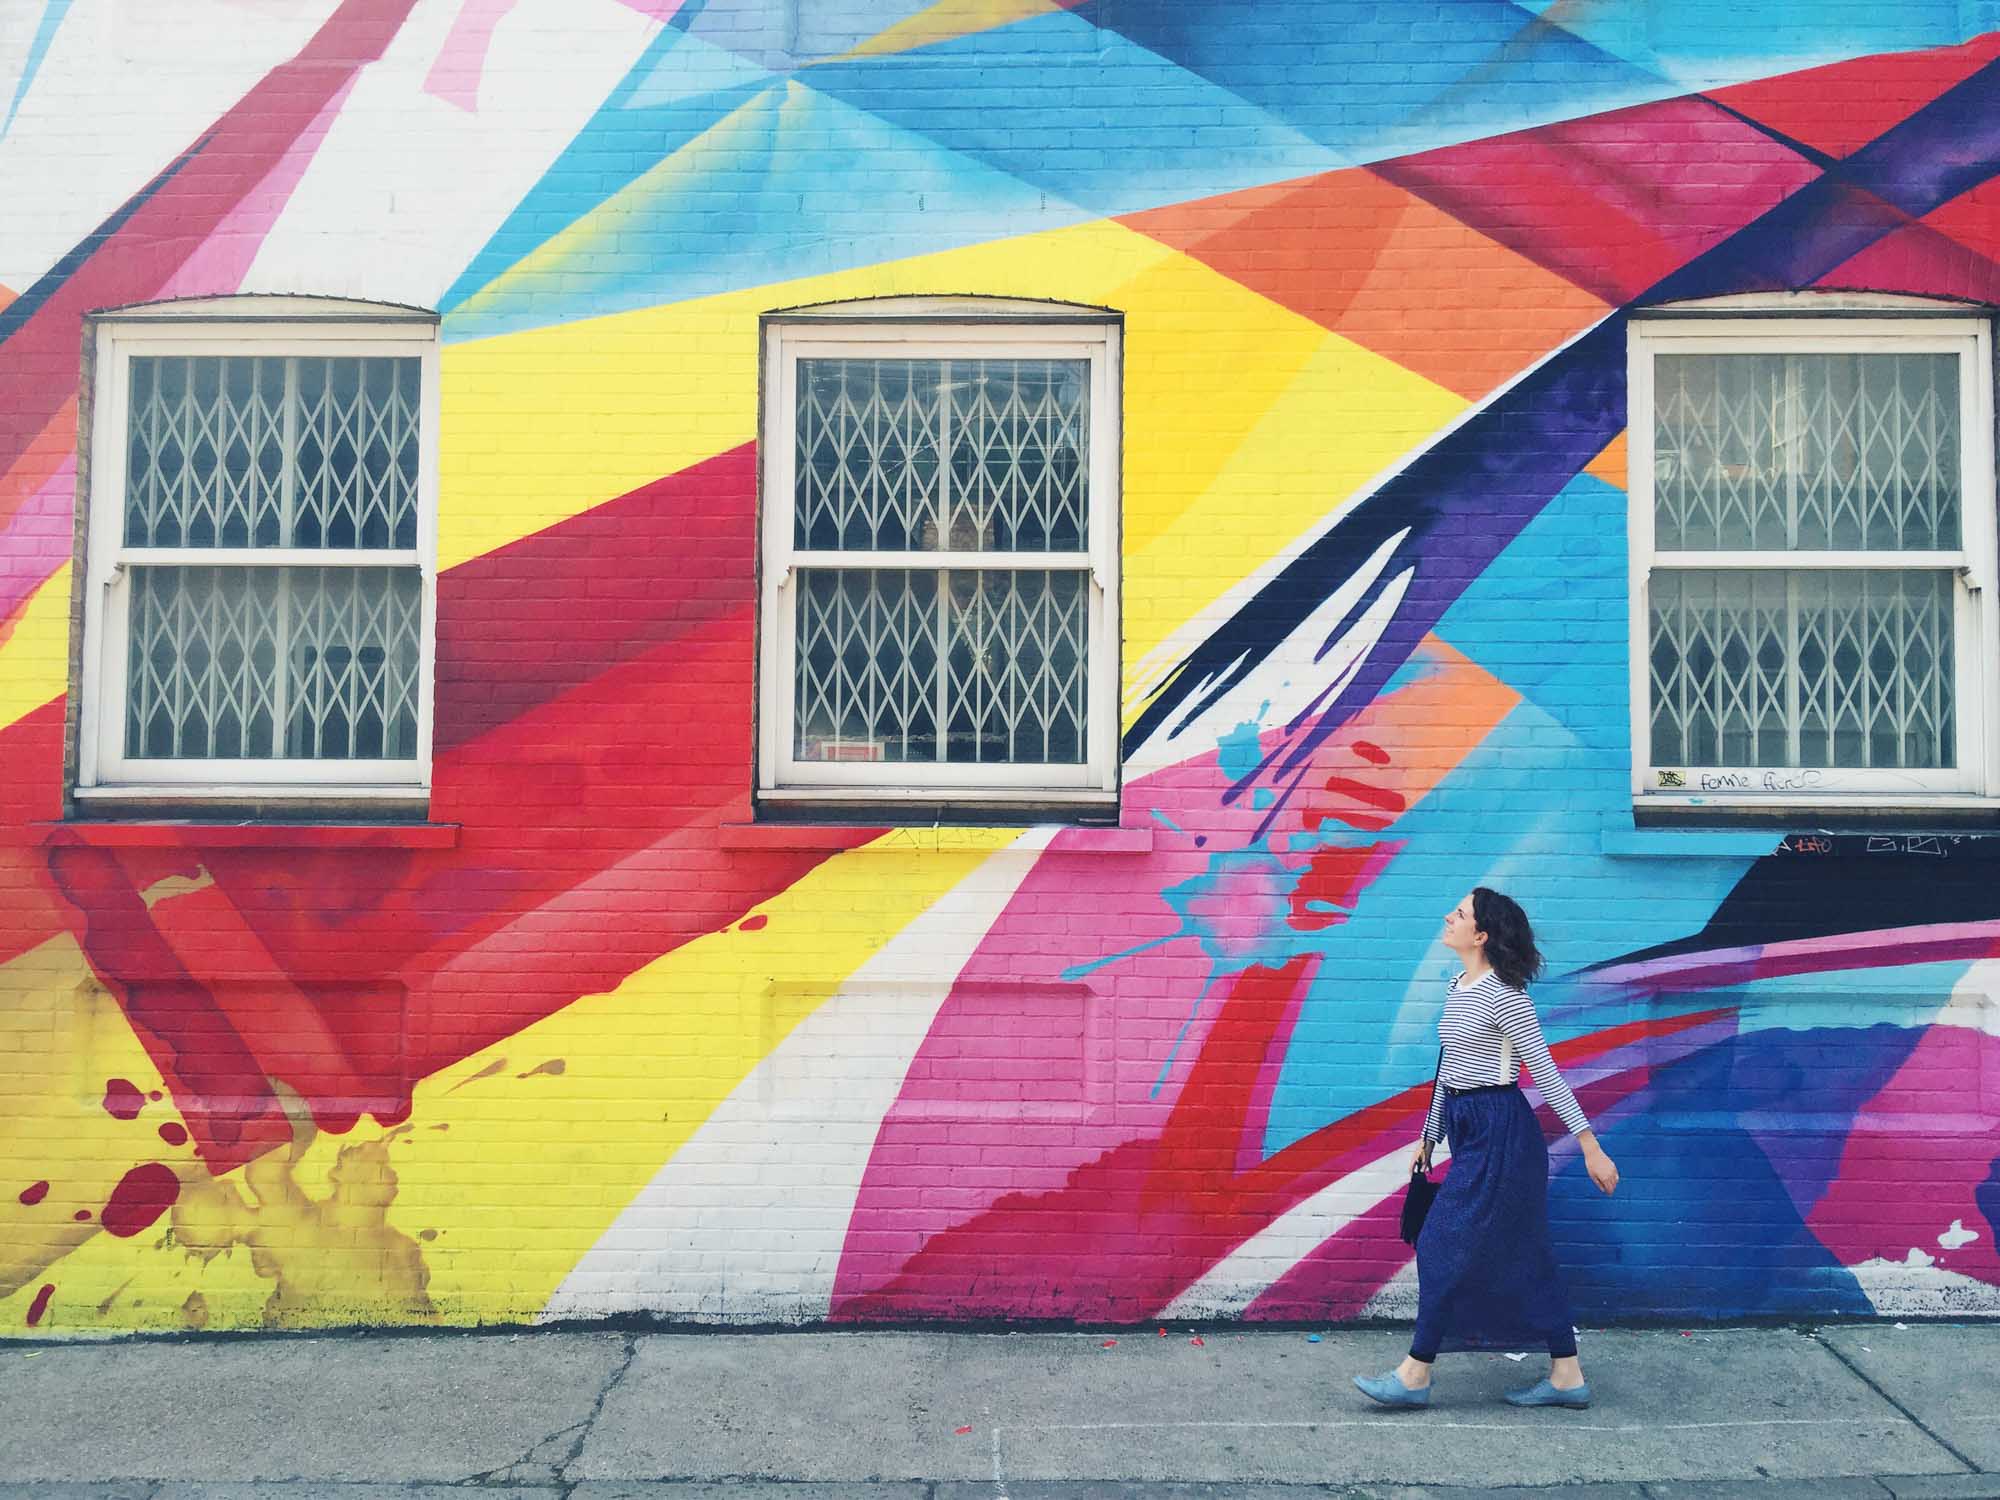 Best Instagram places in London - Shoreditch street art